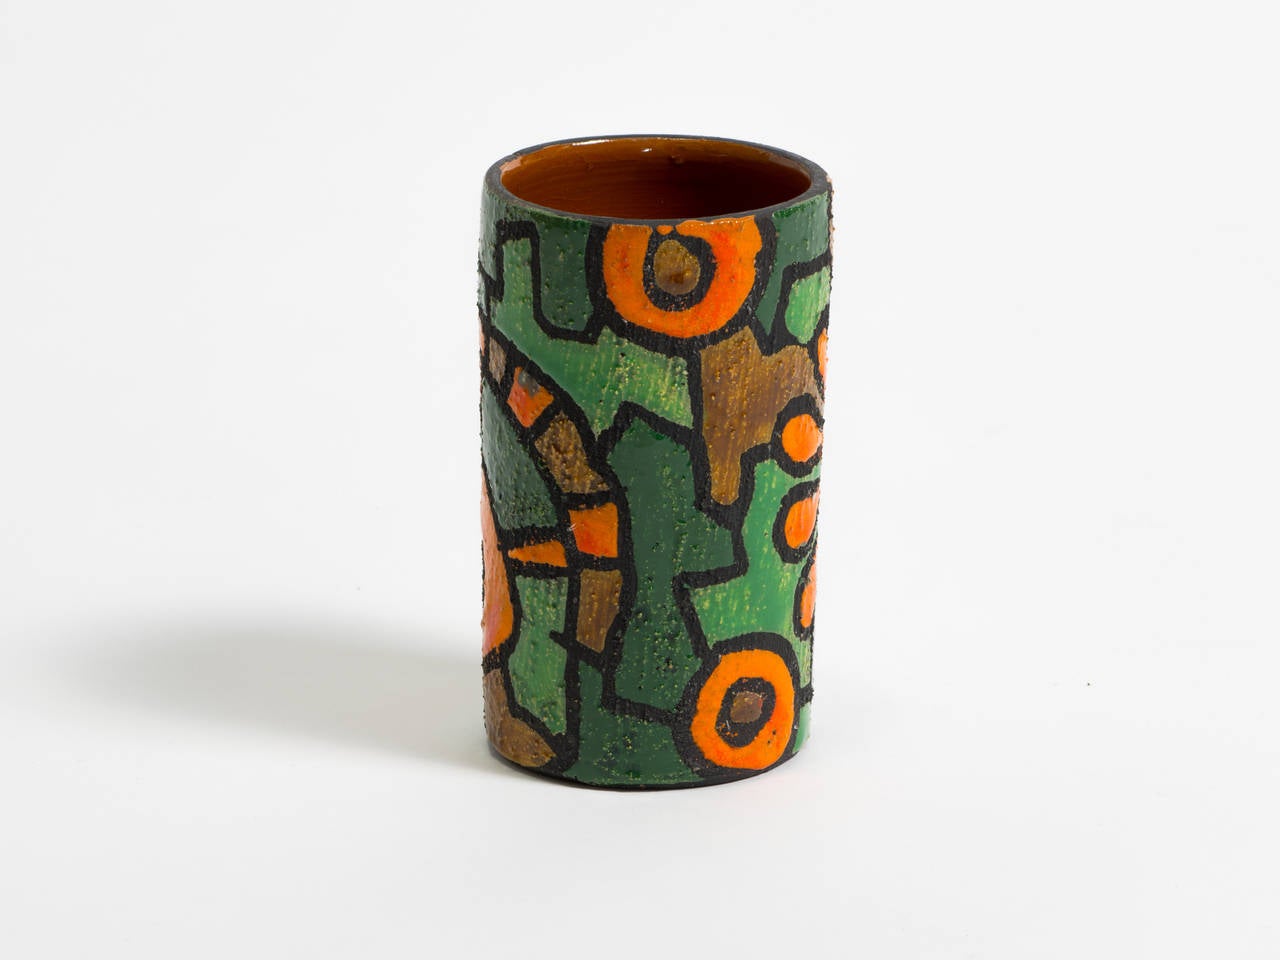 Beautiful Italian ceramic vase by Alvino Bagni for Raymor.